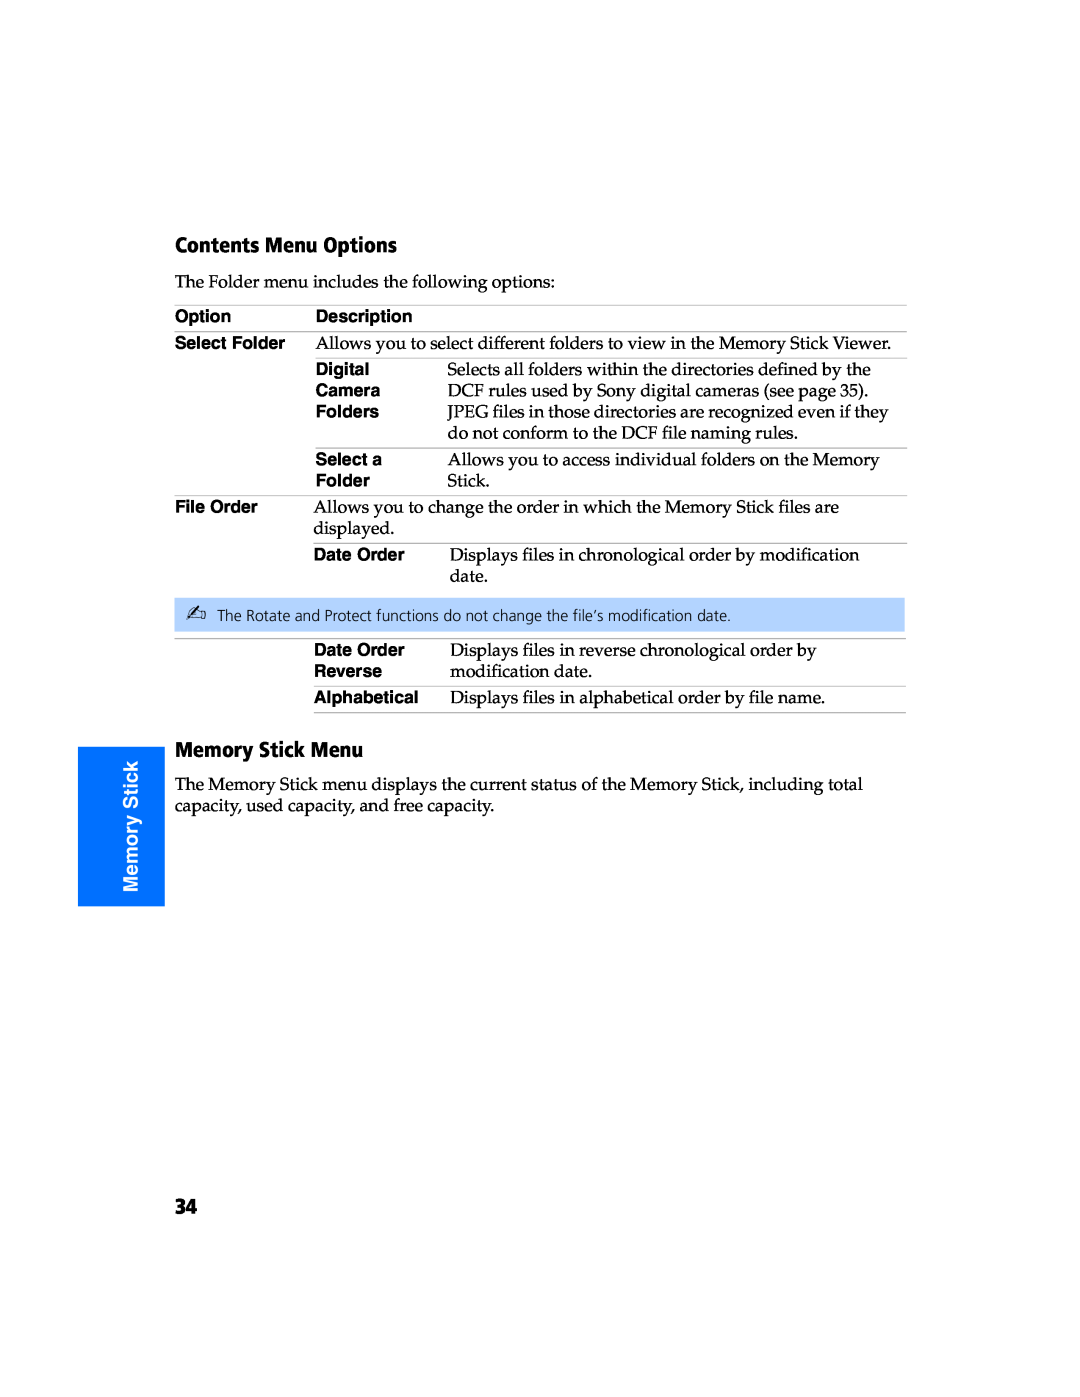 Sony KV 27FS320 manual Contents Menu Options, Memory Stick Menu 